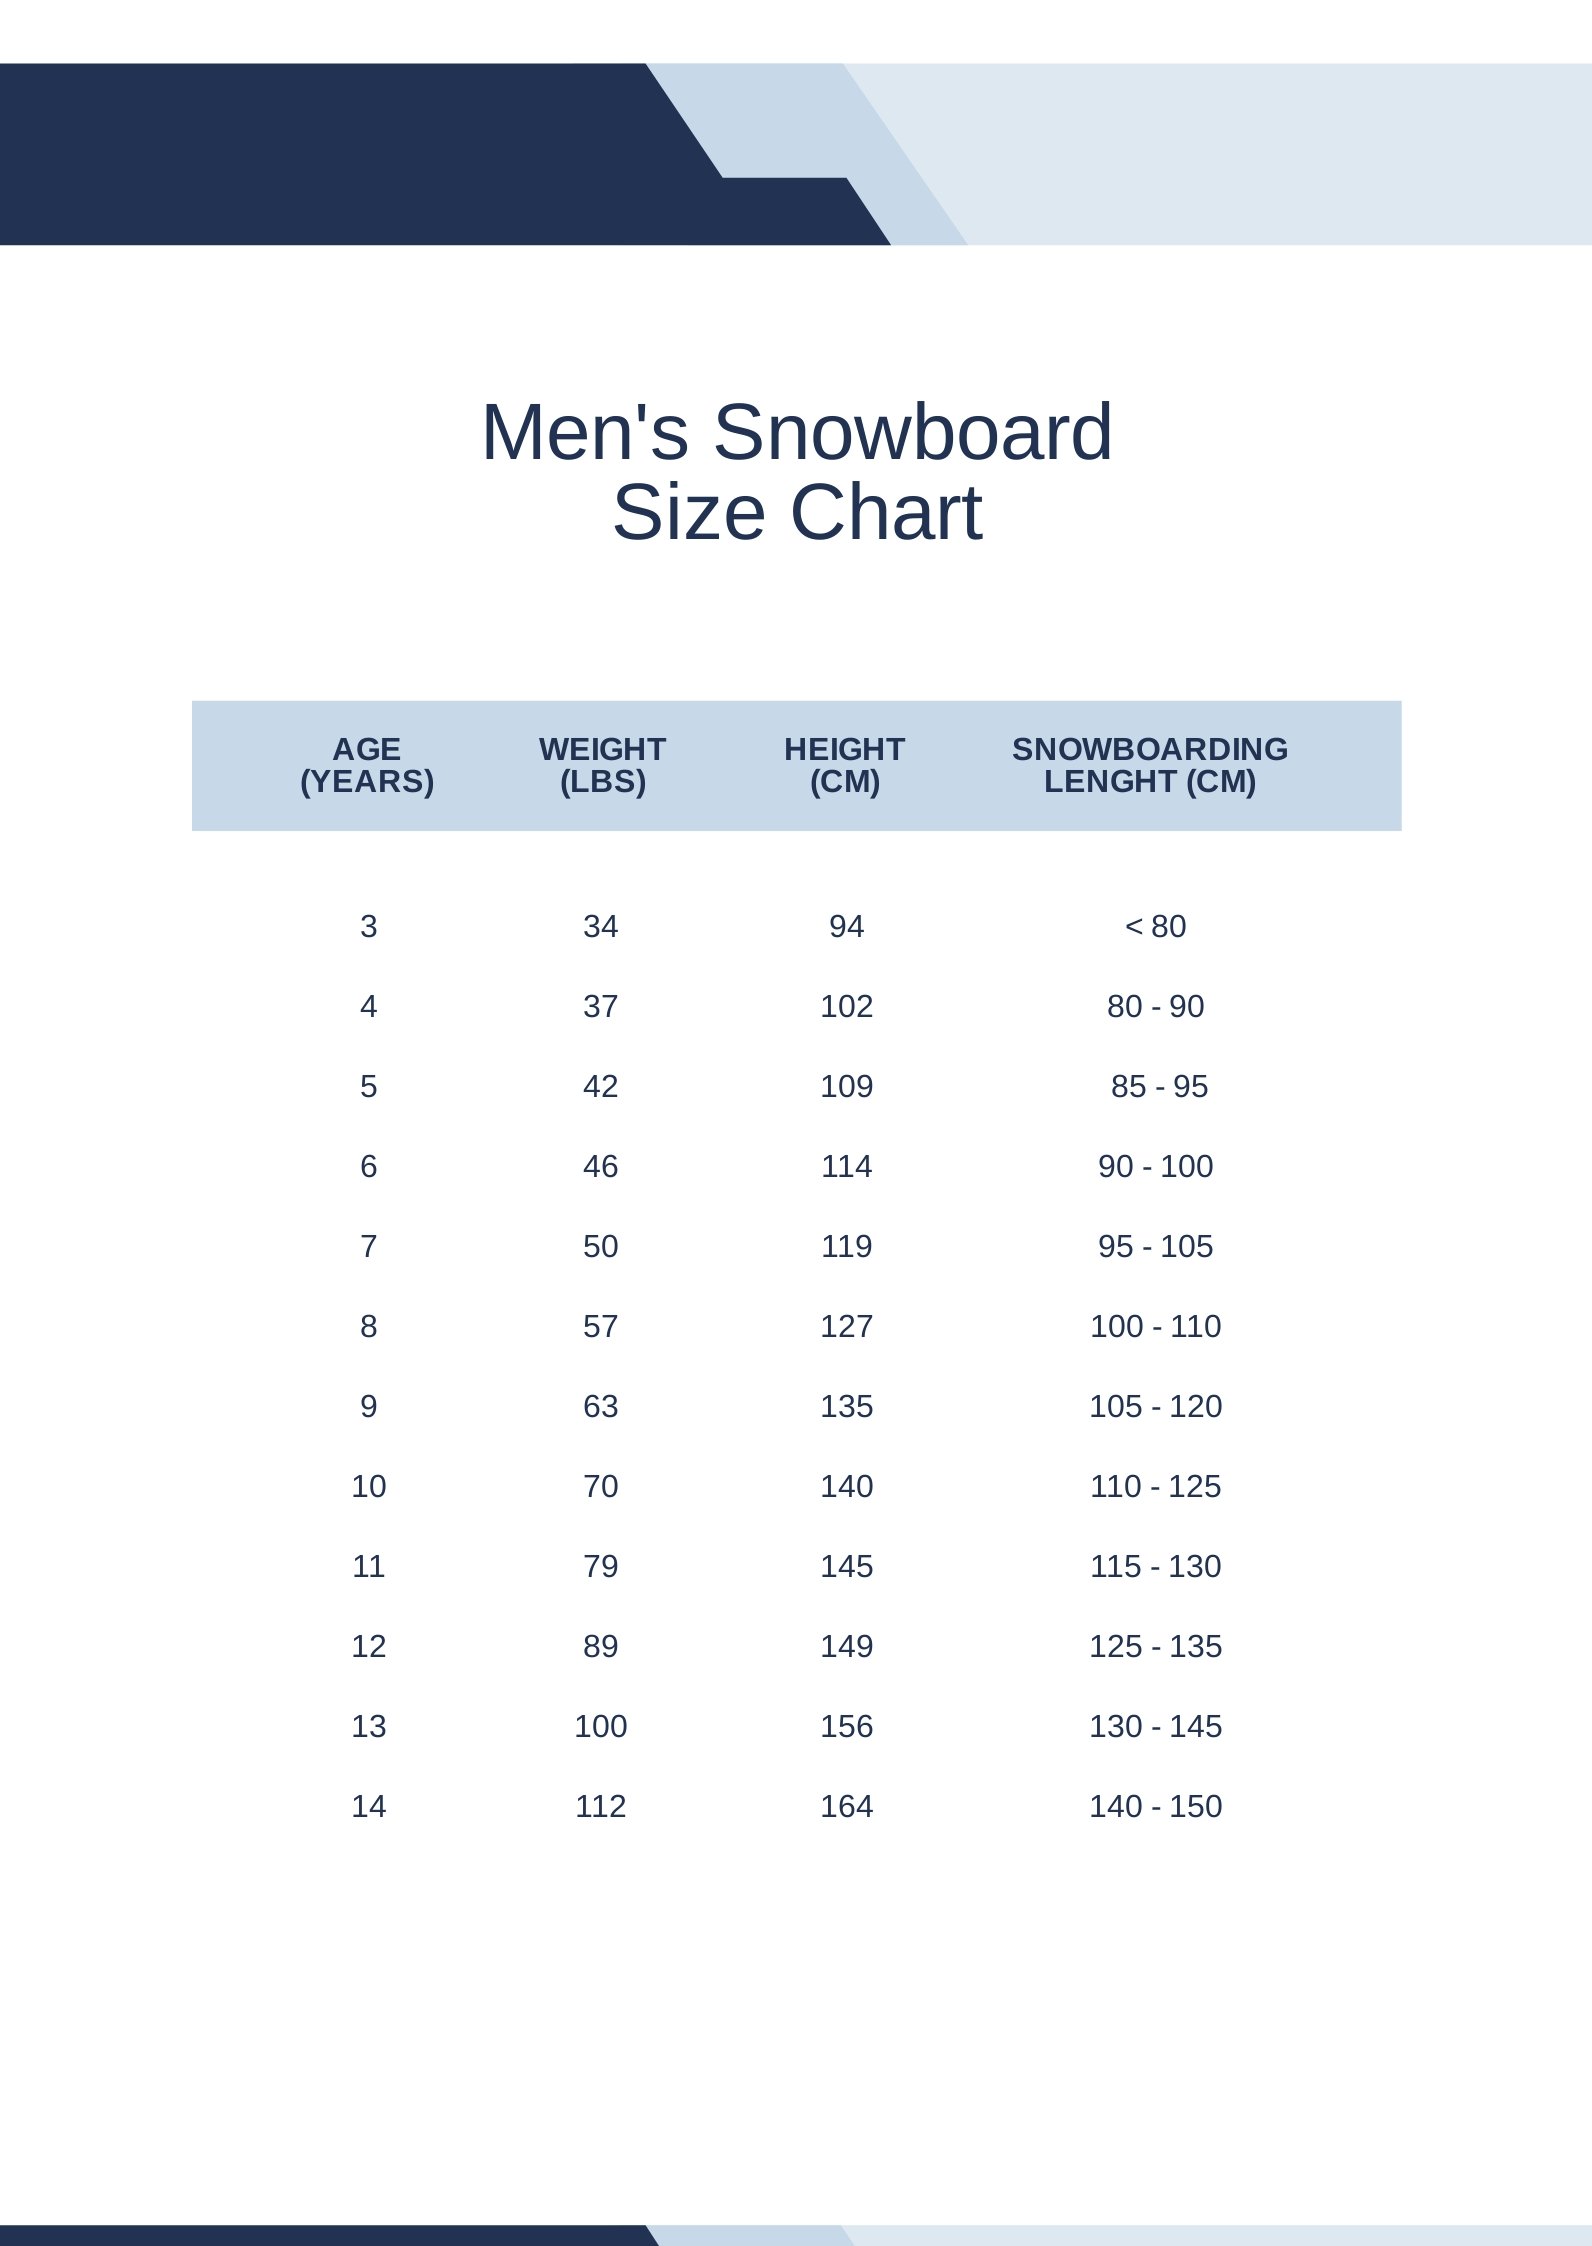 Men's Snowboard Size Chart in PDF